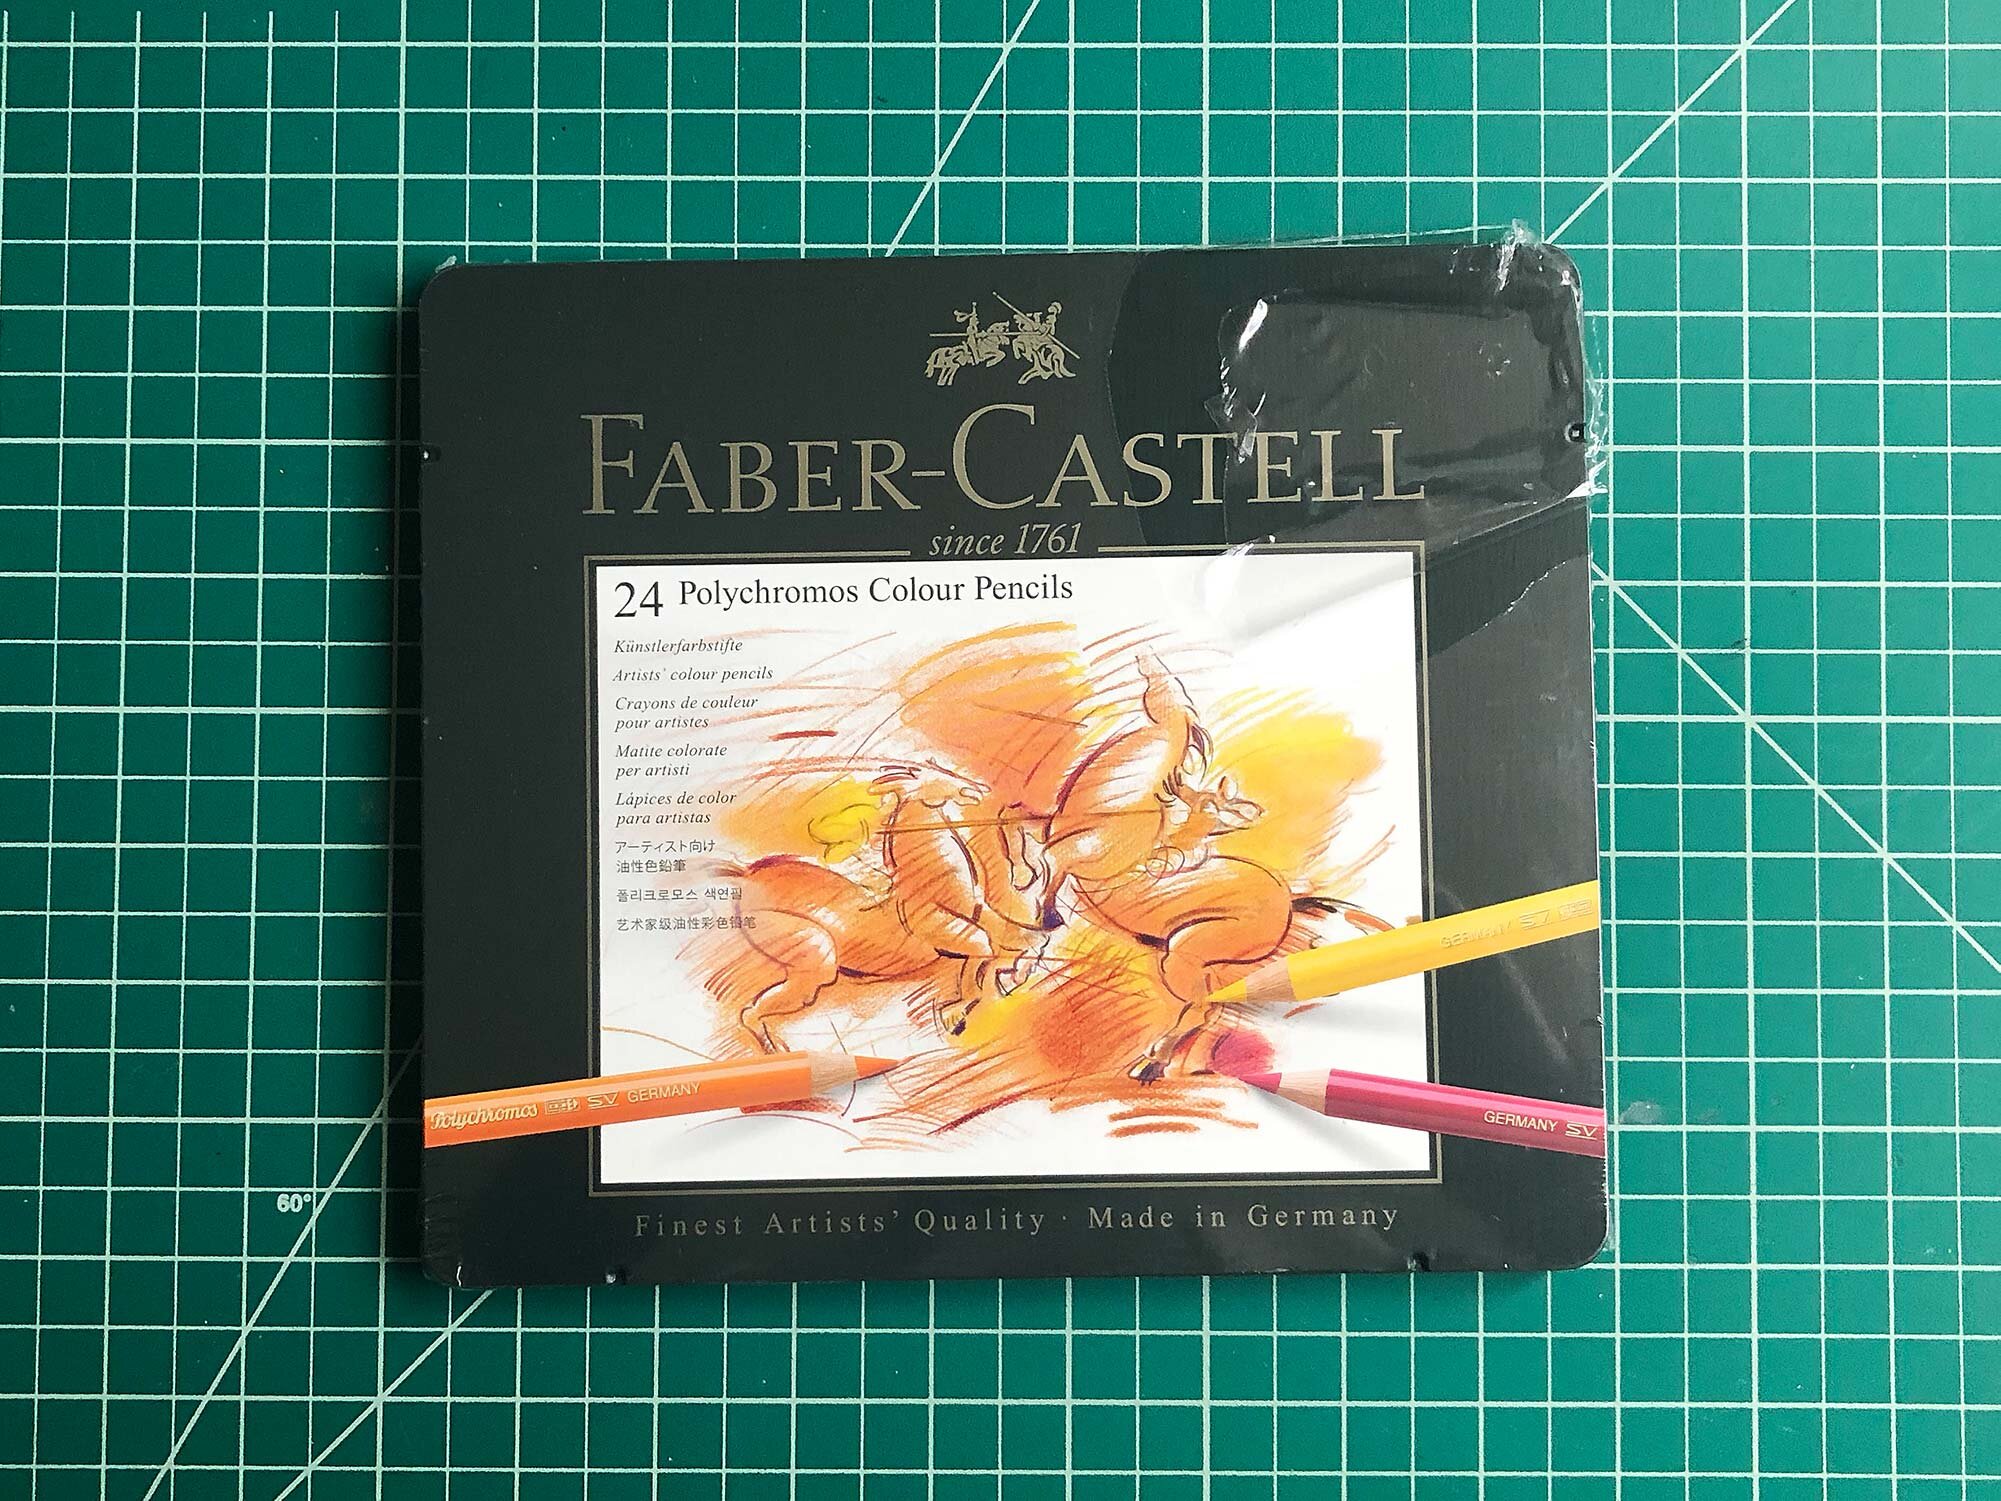 50 Colores Profesionales Lápices Super Soft Faber Castell